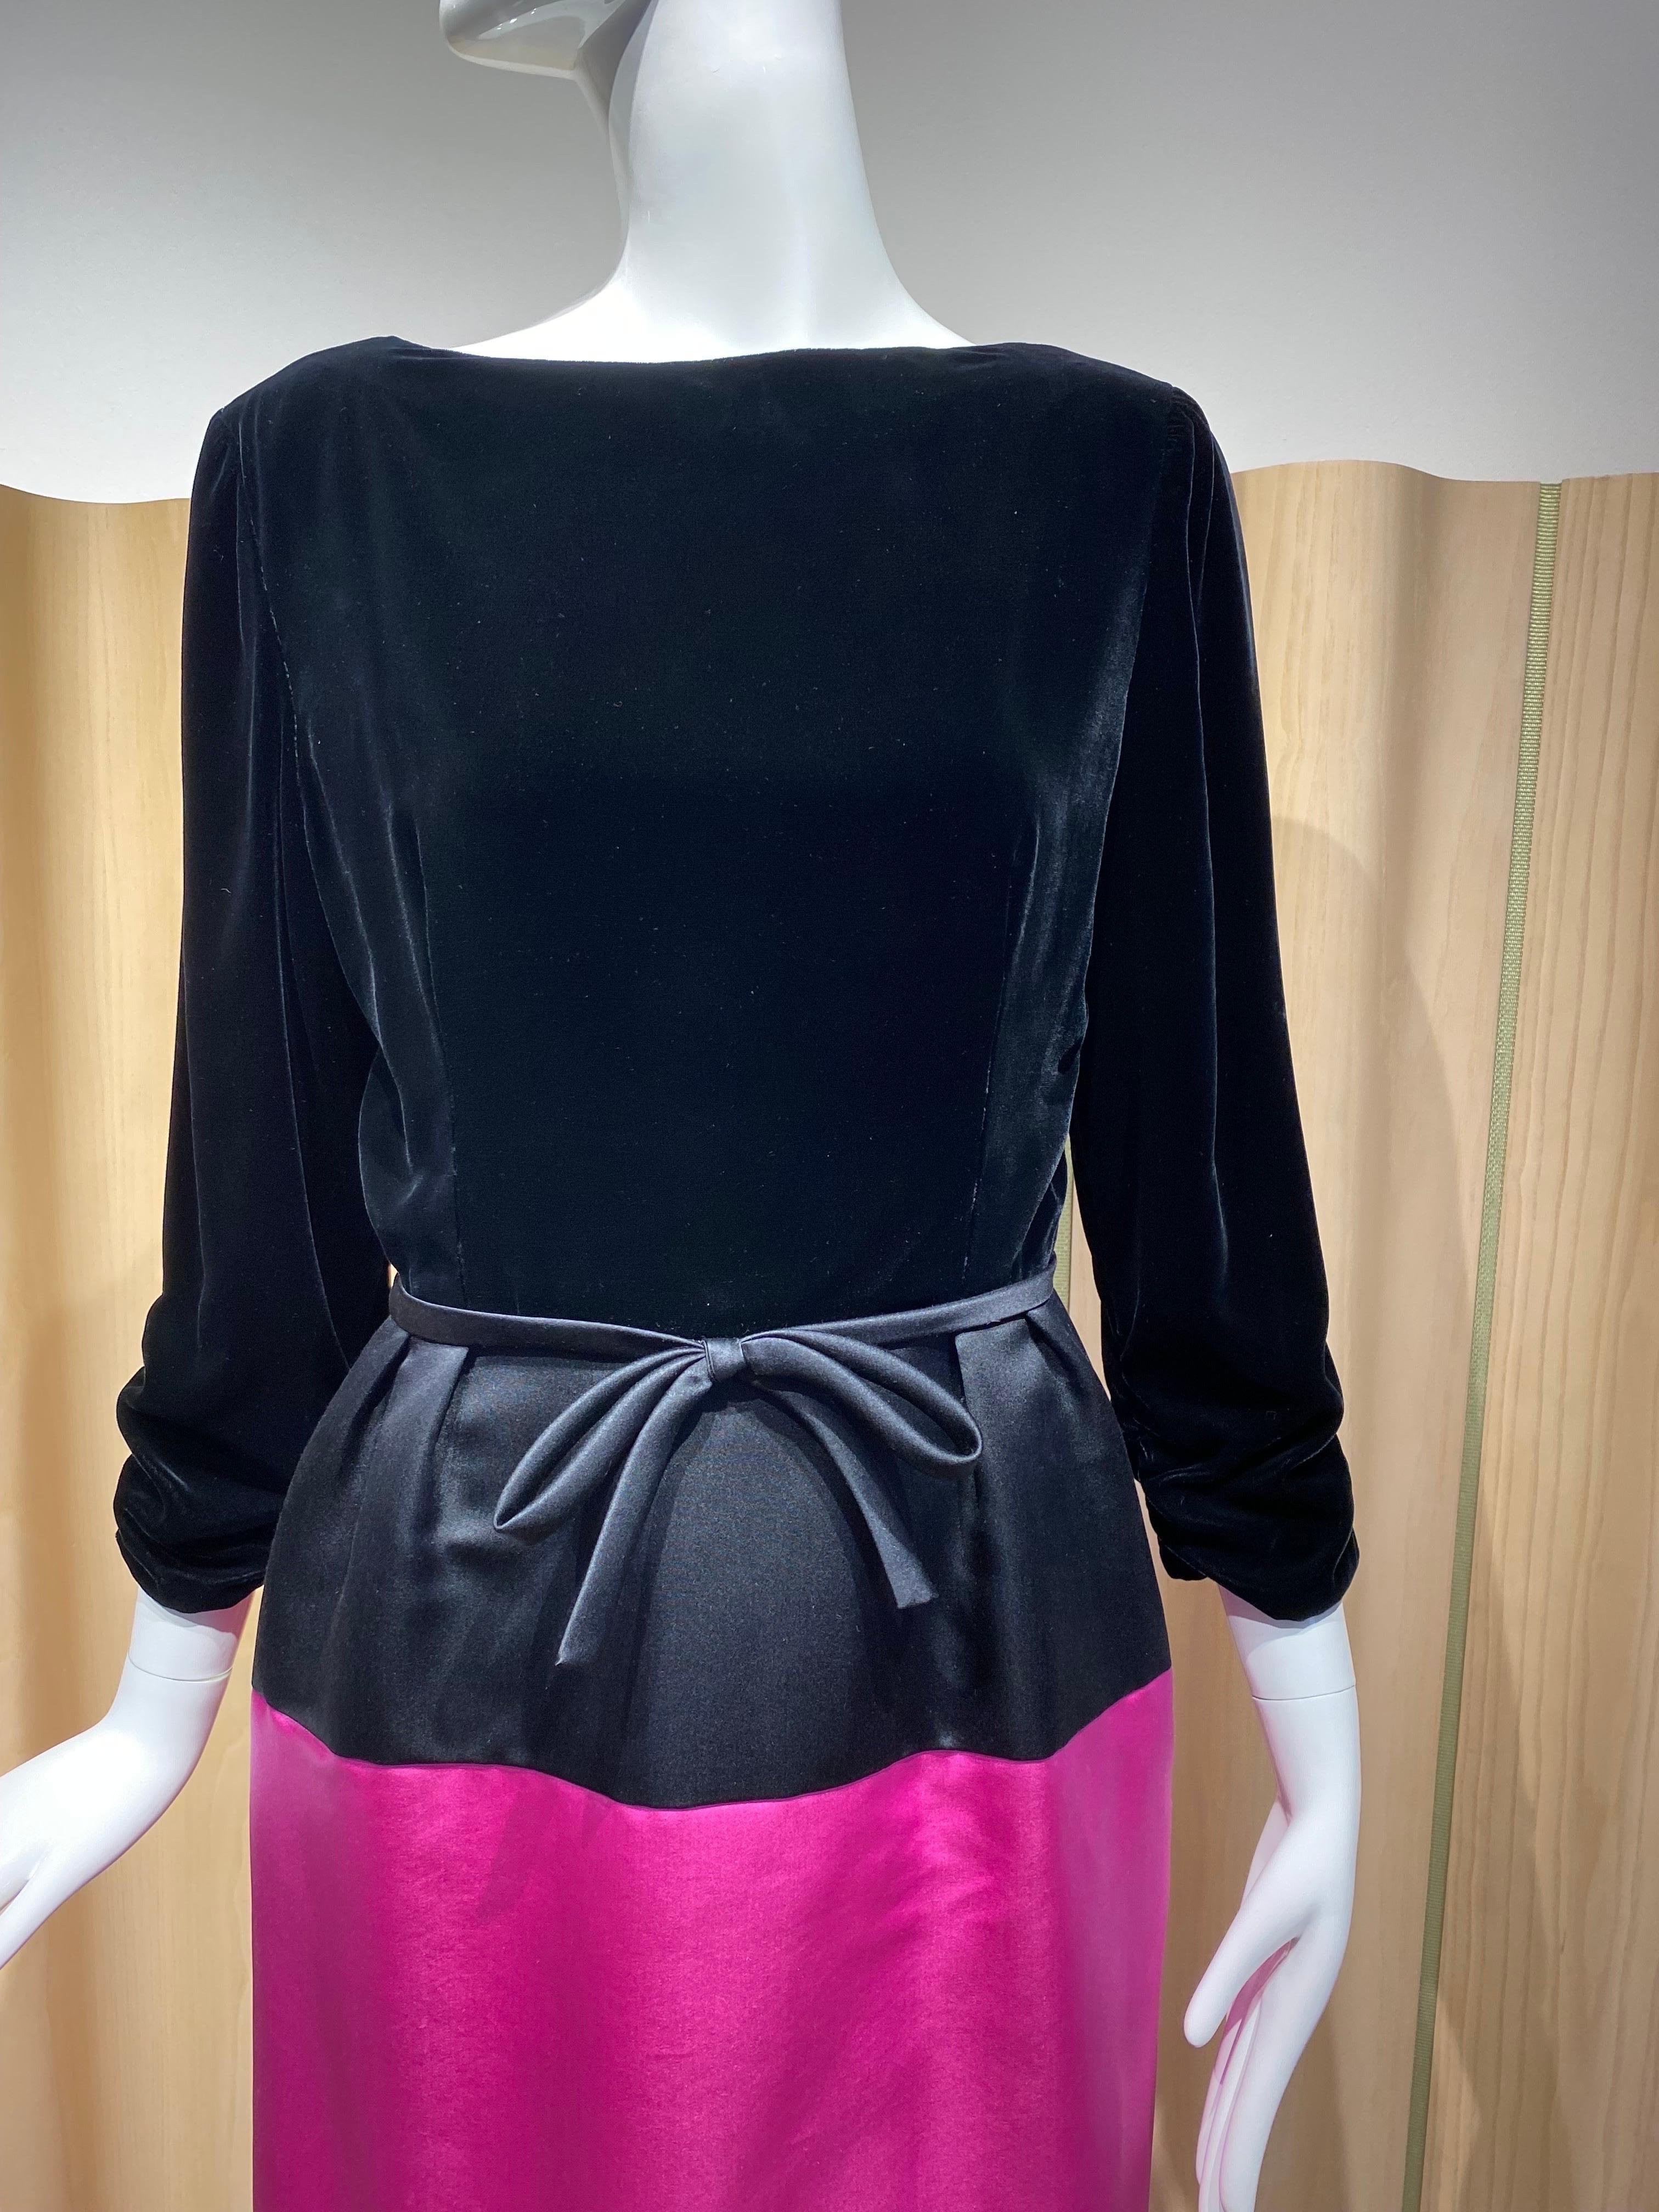 1980s Bill Blass Black Velvet and hot pink satin  cocktail dress 
- 3/4 Sleeves - satin bow
Fitted waist .
Size Small
Bust 36” / Waist 26” / Hip 40” 